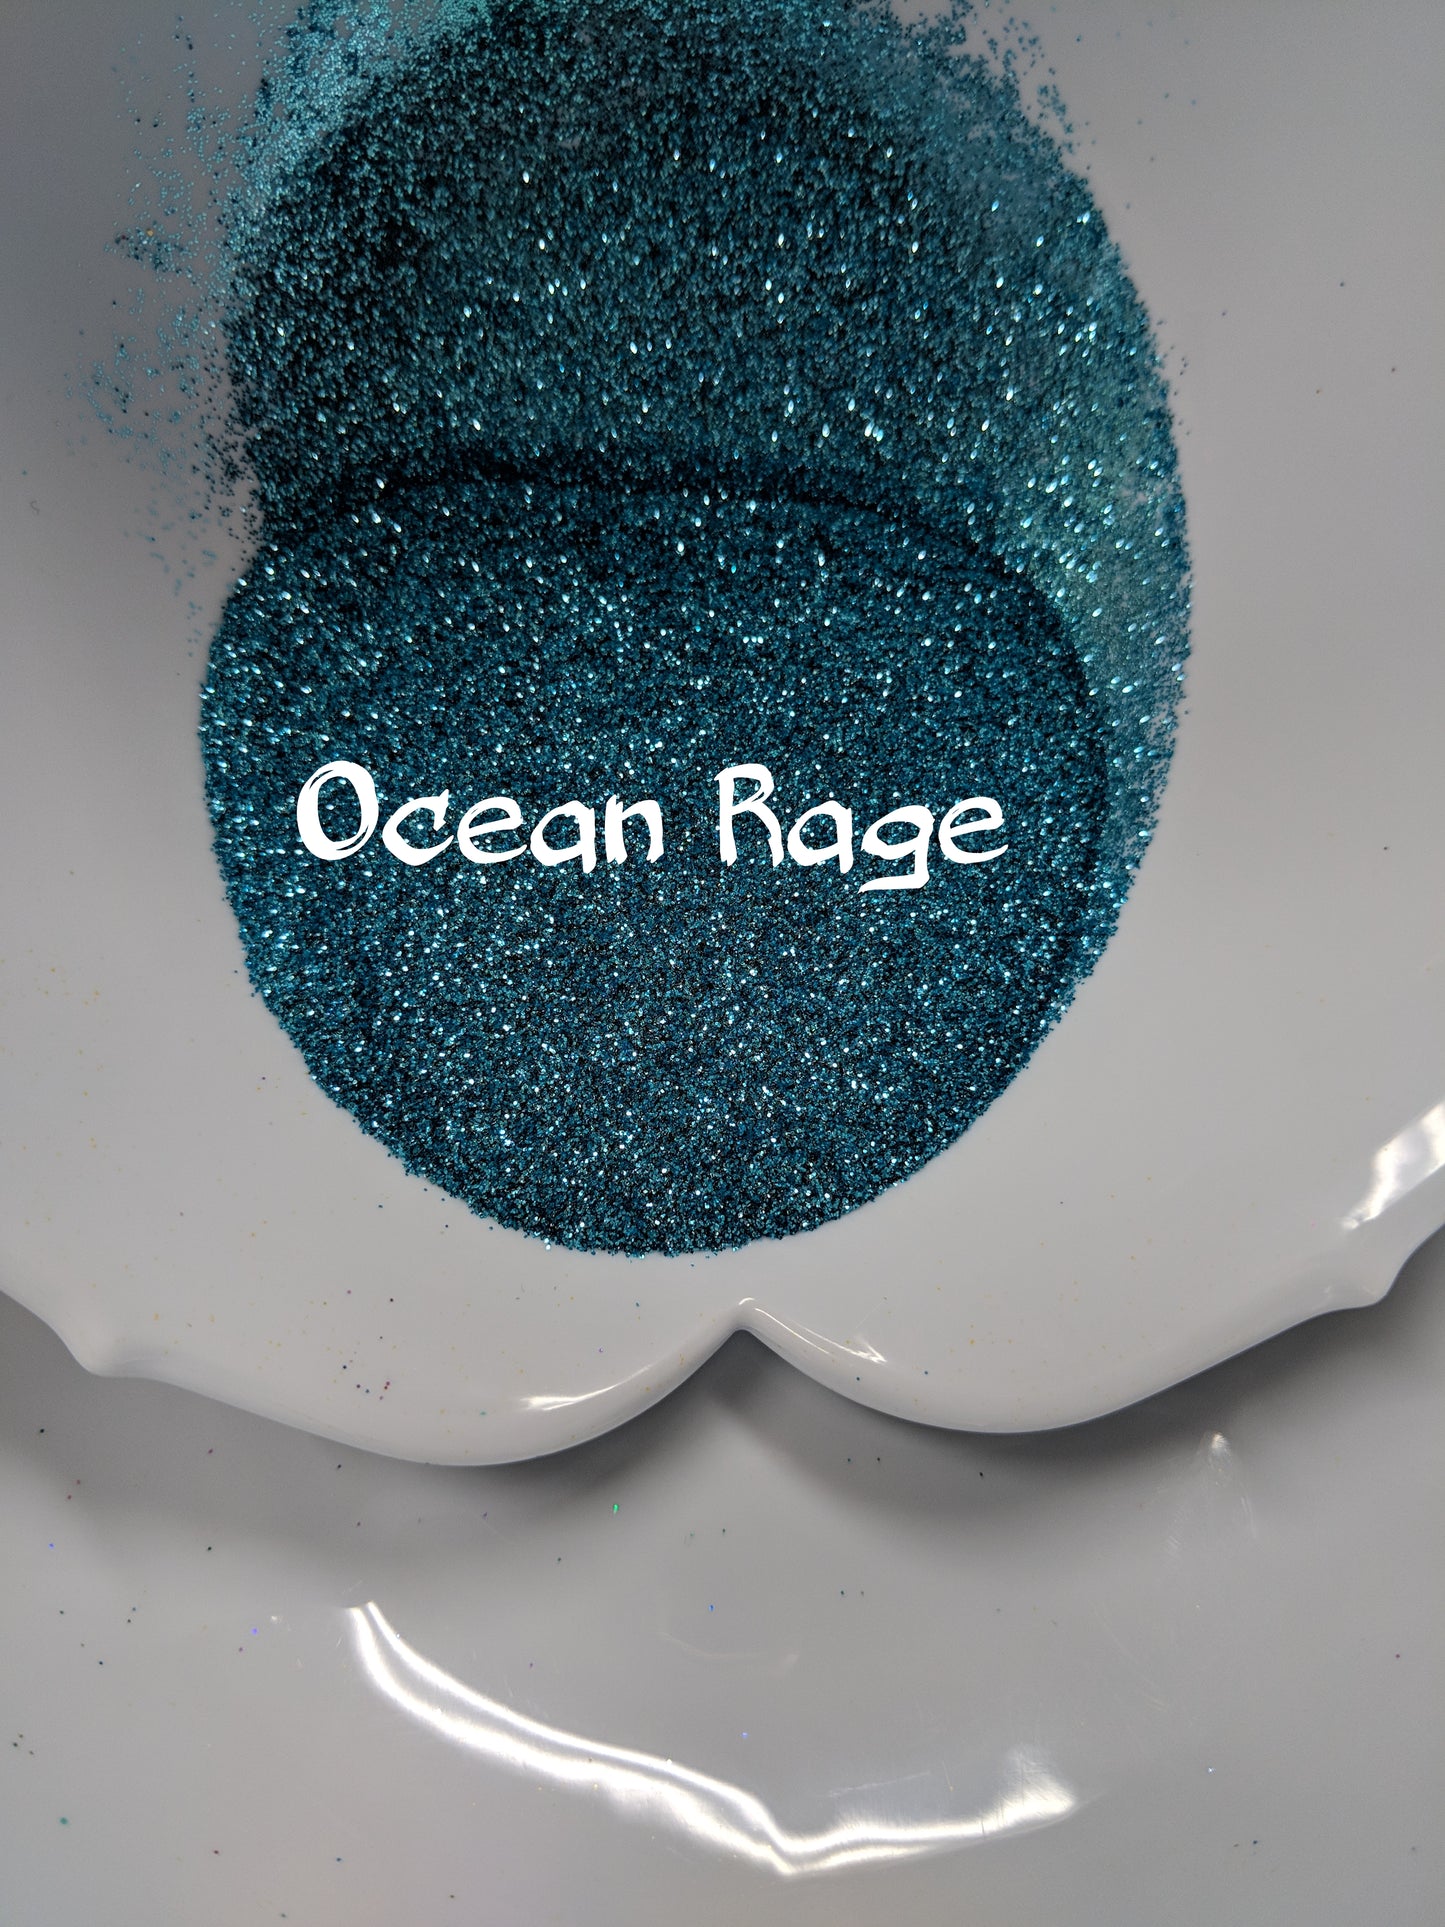 Oceans Rage